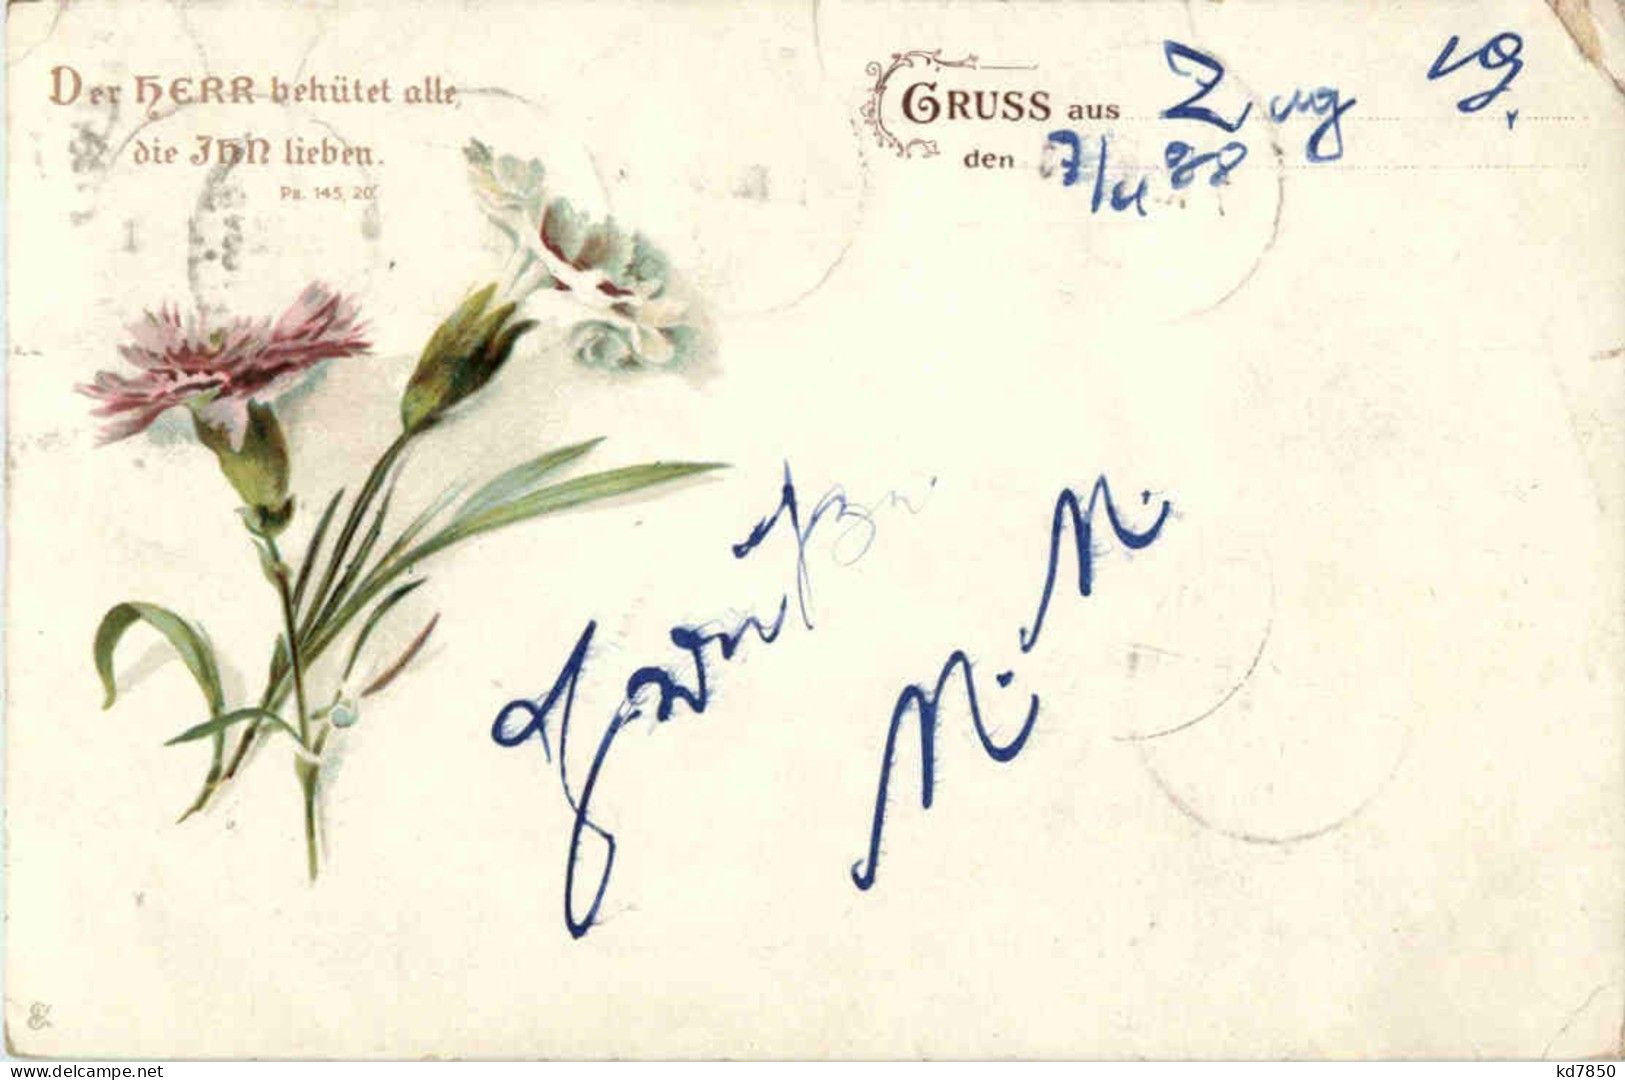 Gruss Aus - Blumen Nelken - Greetings From...